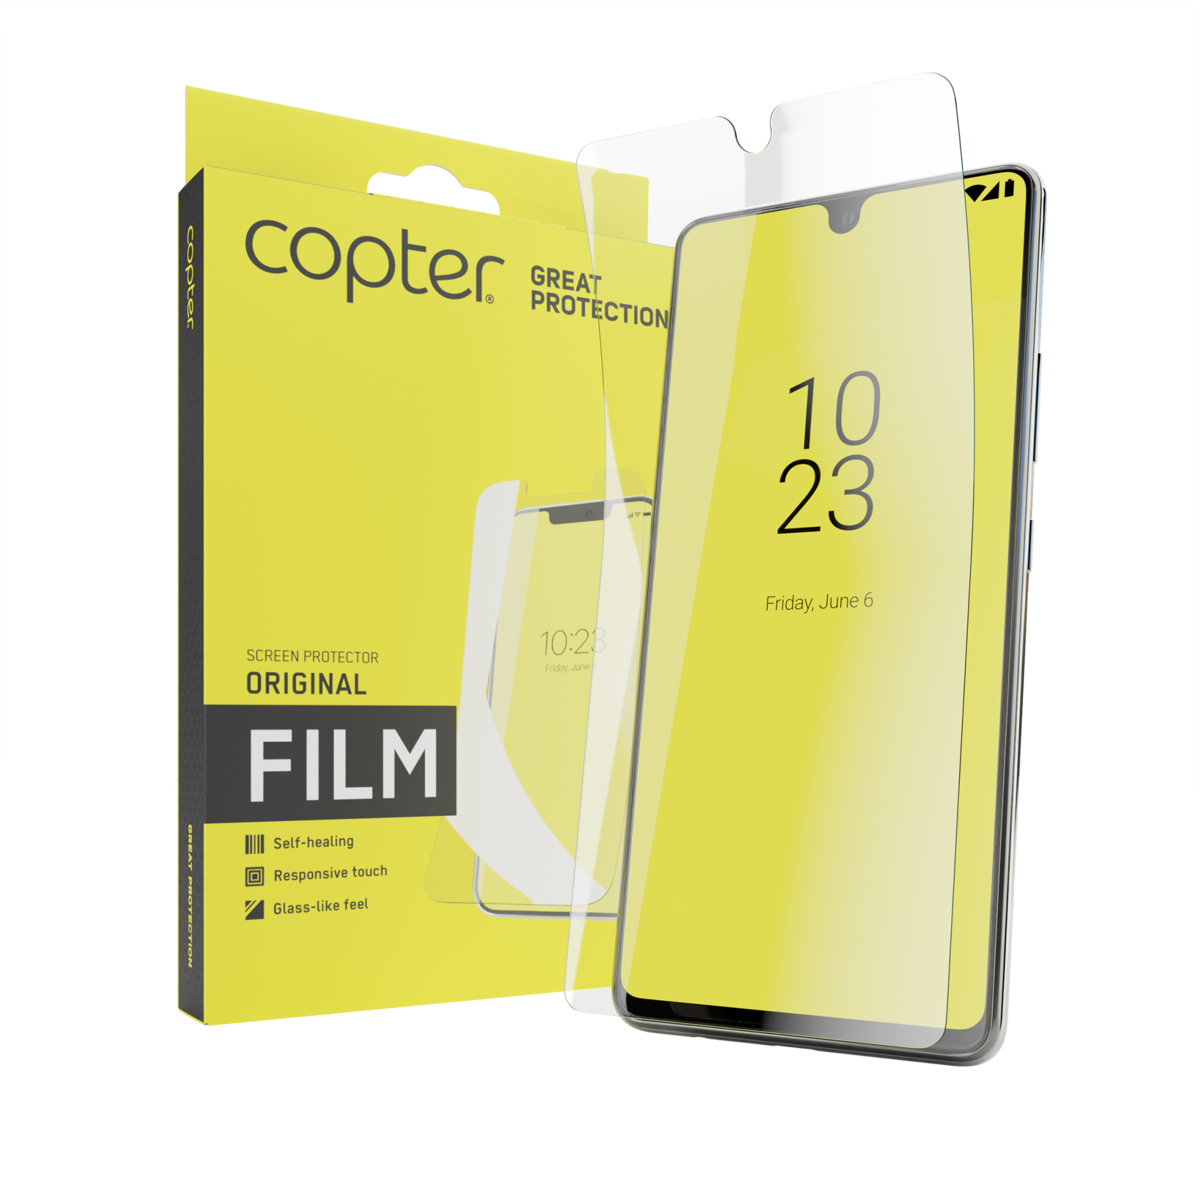 Copter Displayfilm Doro 8050 Transparent